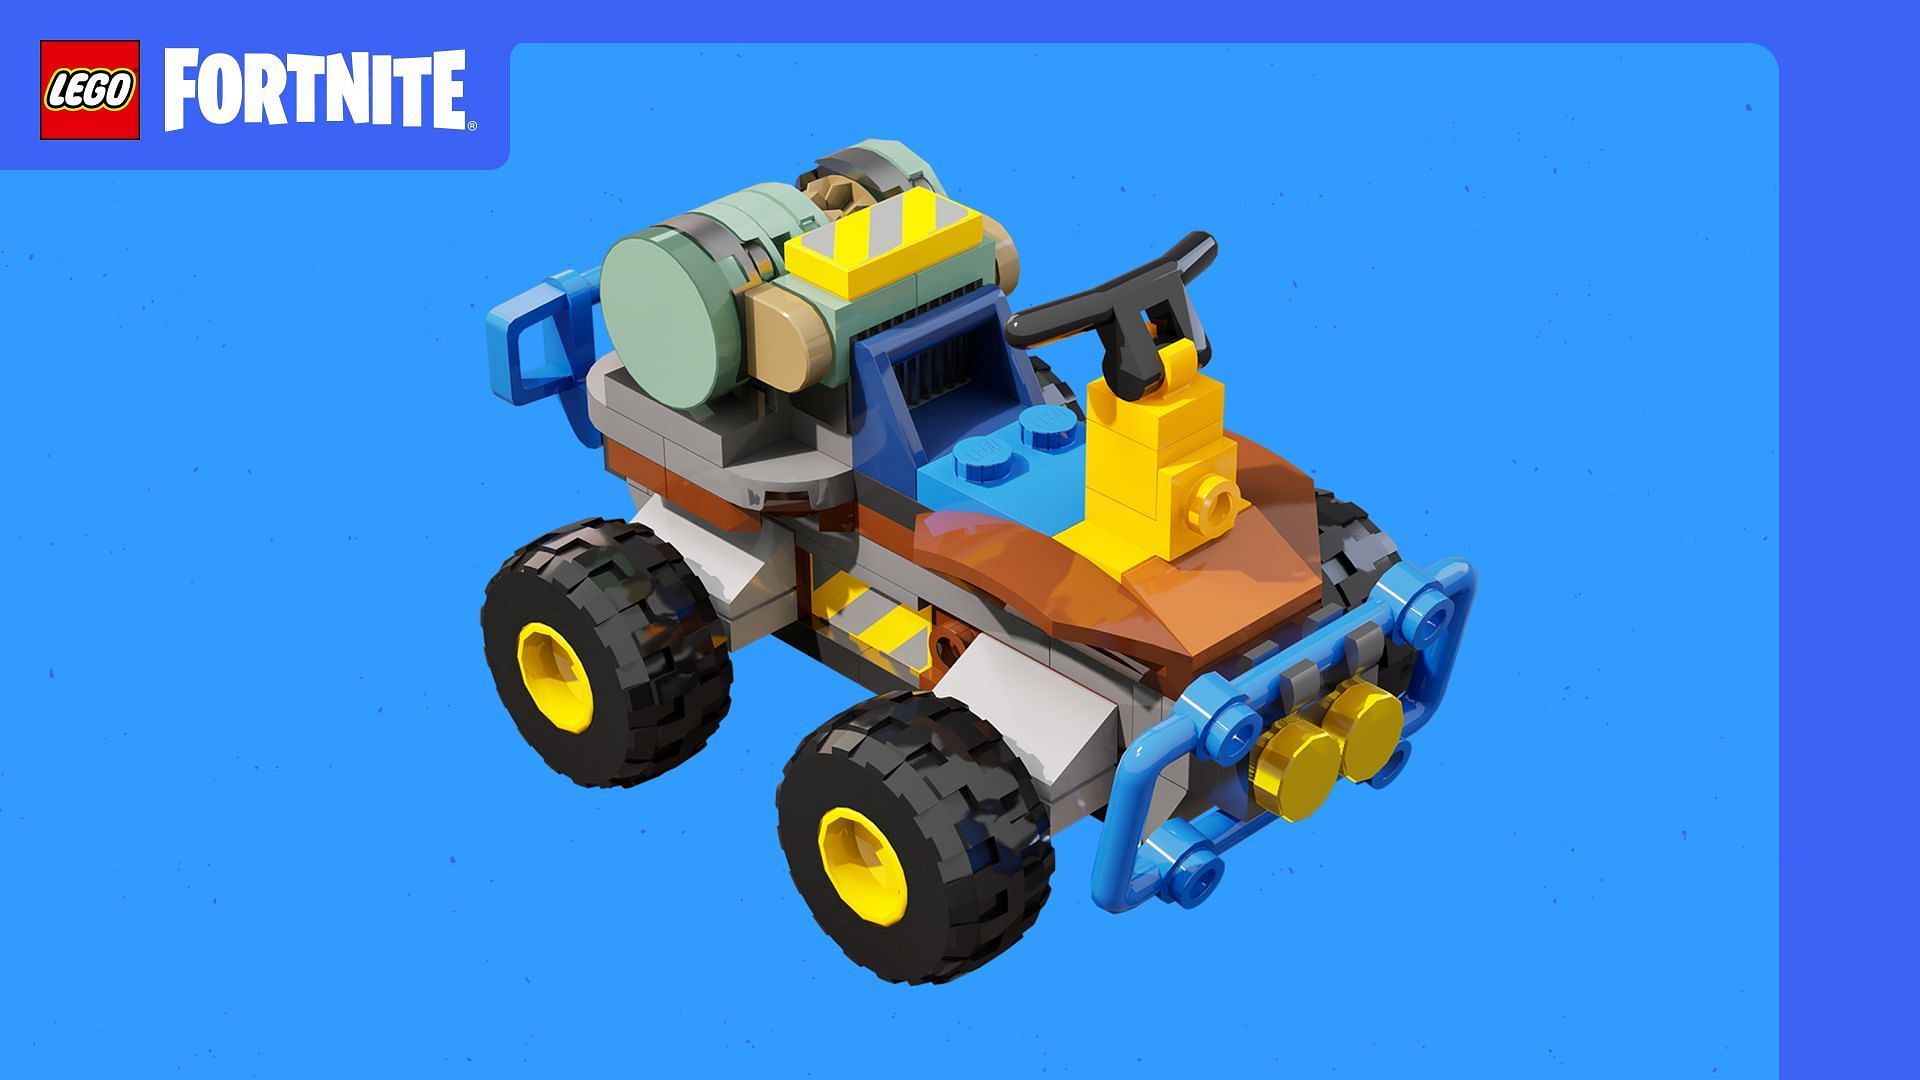 Speeder in LEGO Fortnite (Image via Epic Games)